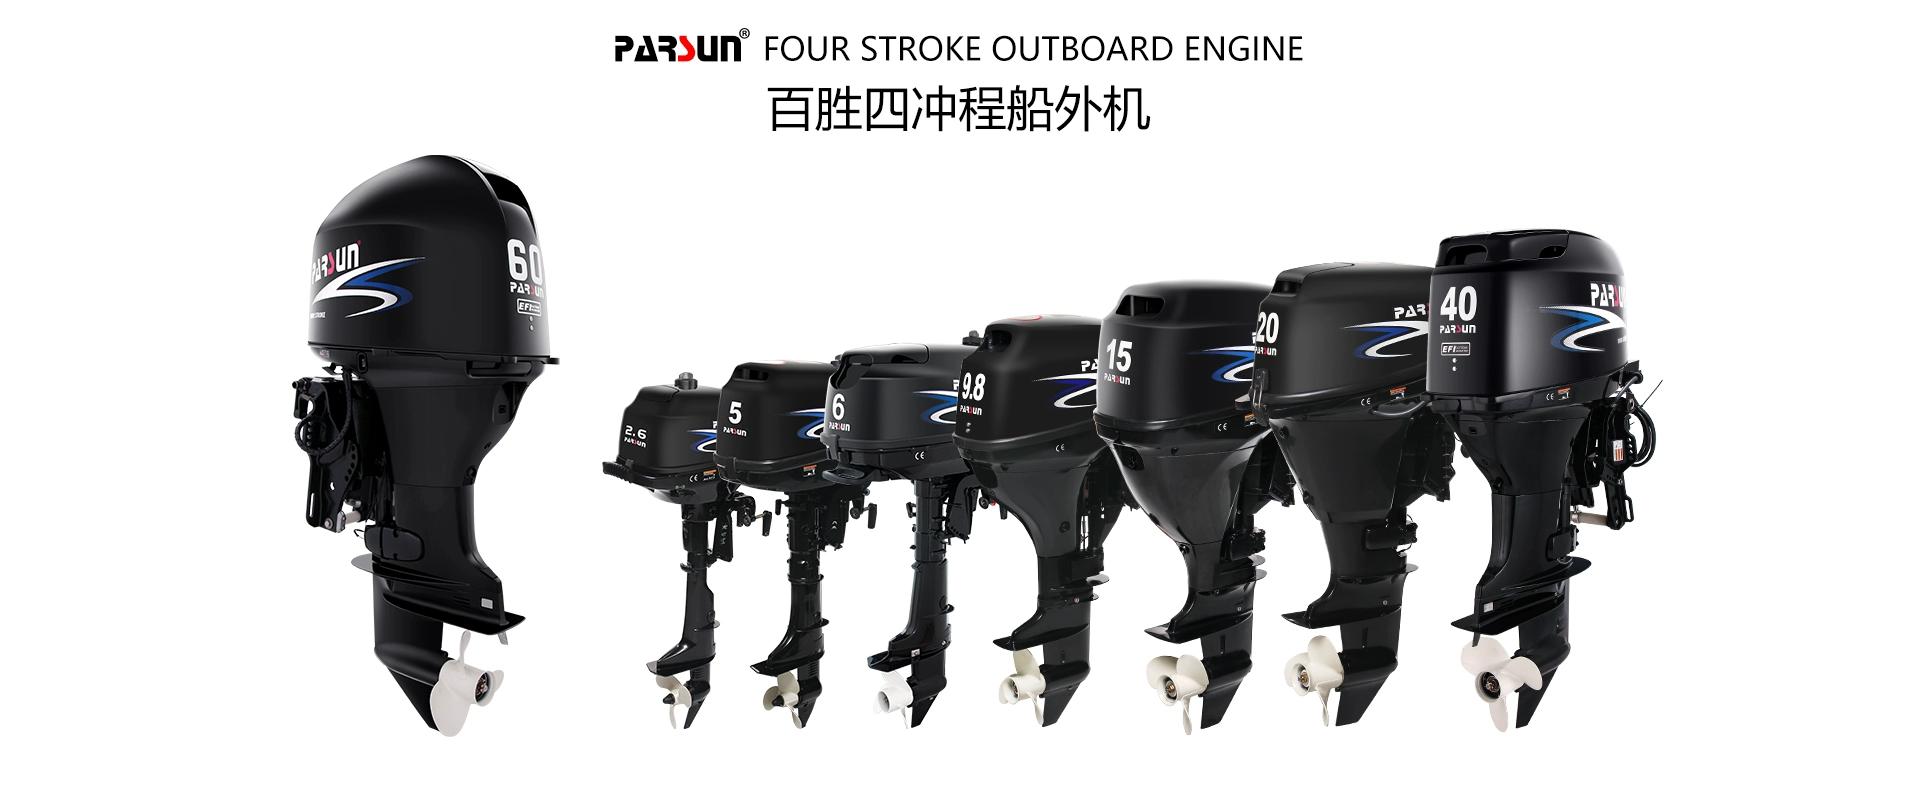 Parsun Outboard engine 2 stroke, 4 stroke boat engine